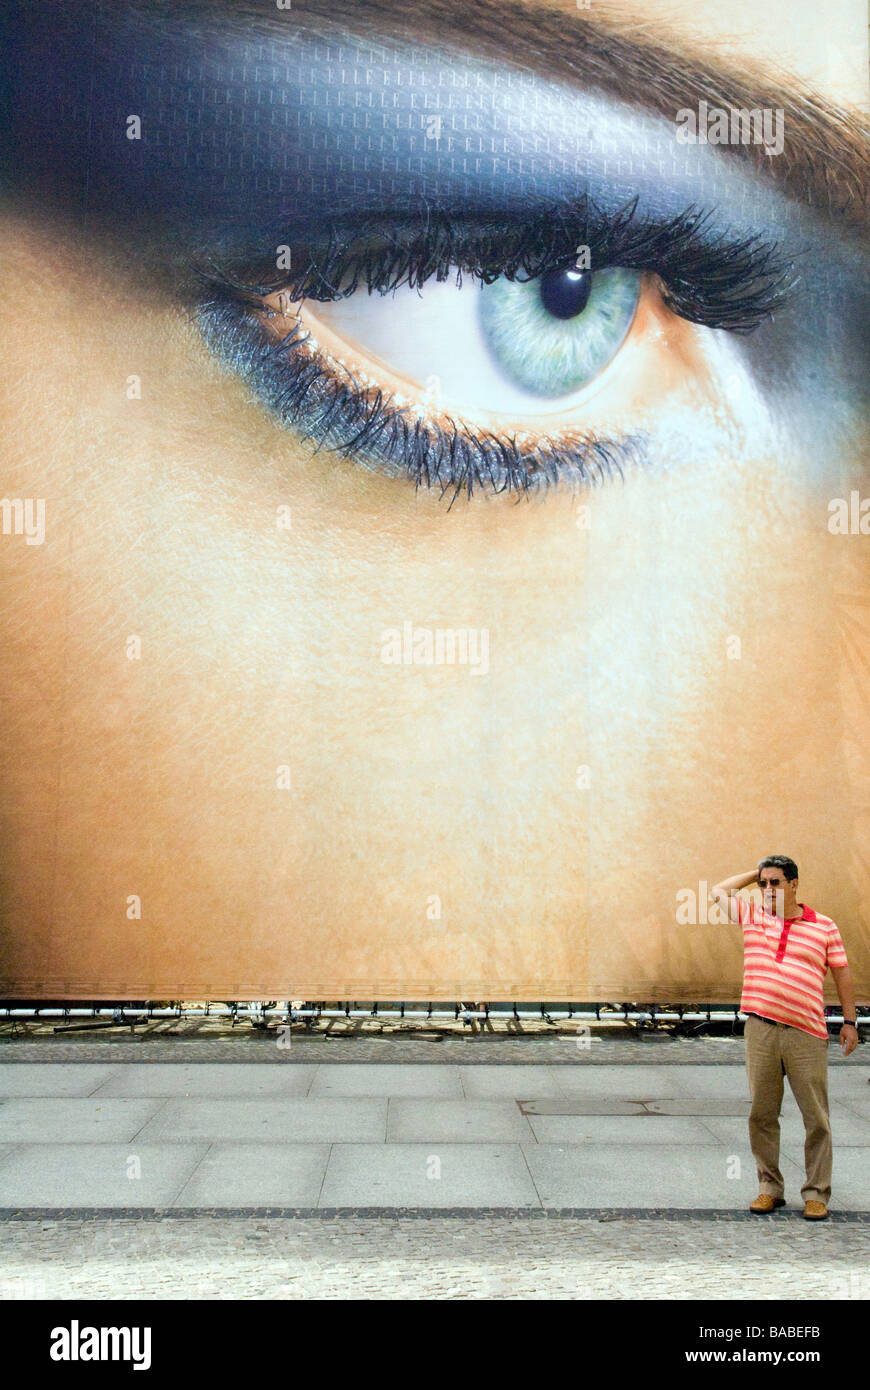 Passerby in front of an ELLE billboard advertisement, Berlin, Germany Stock Photo